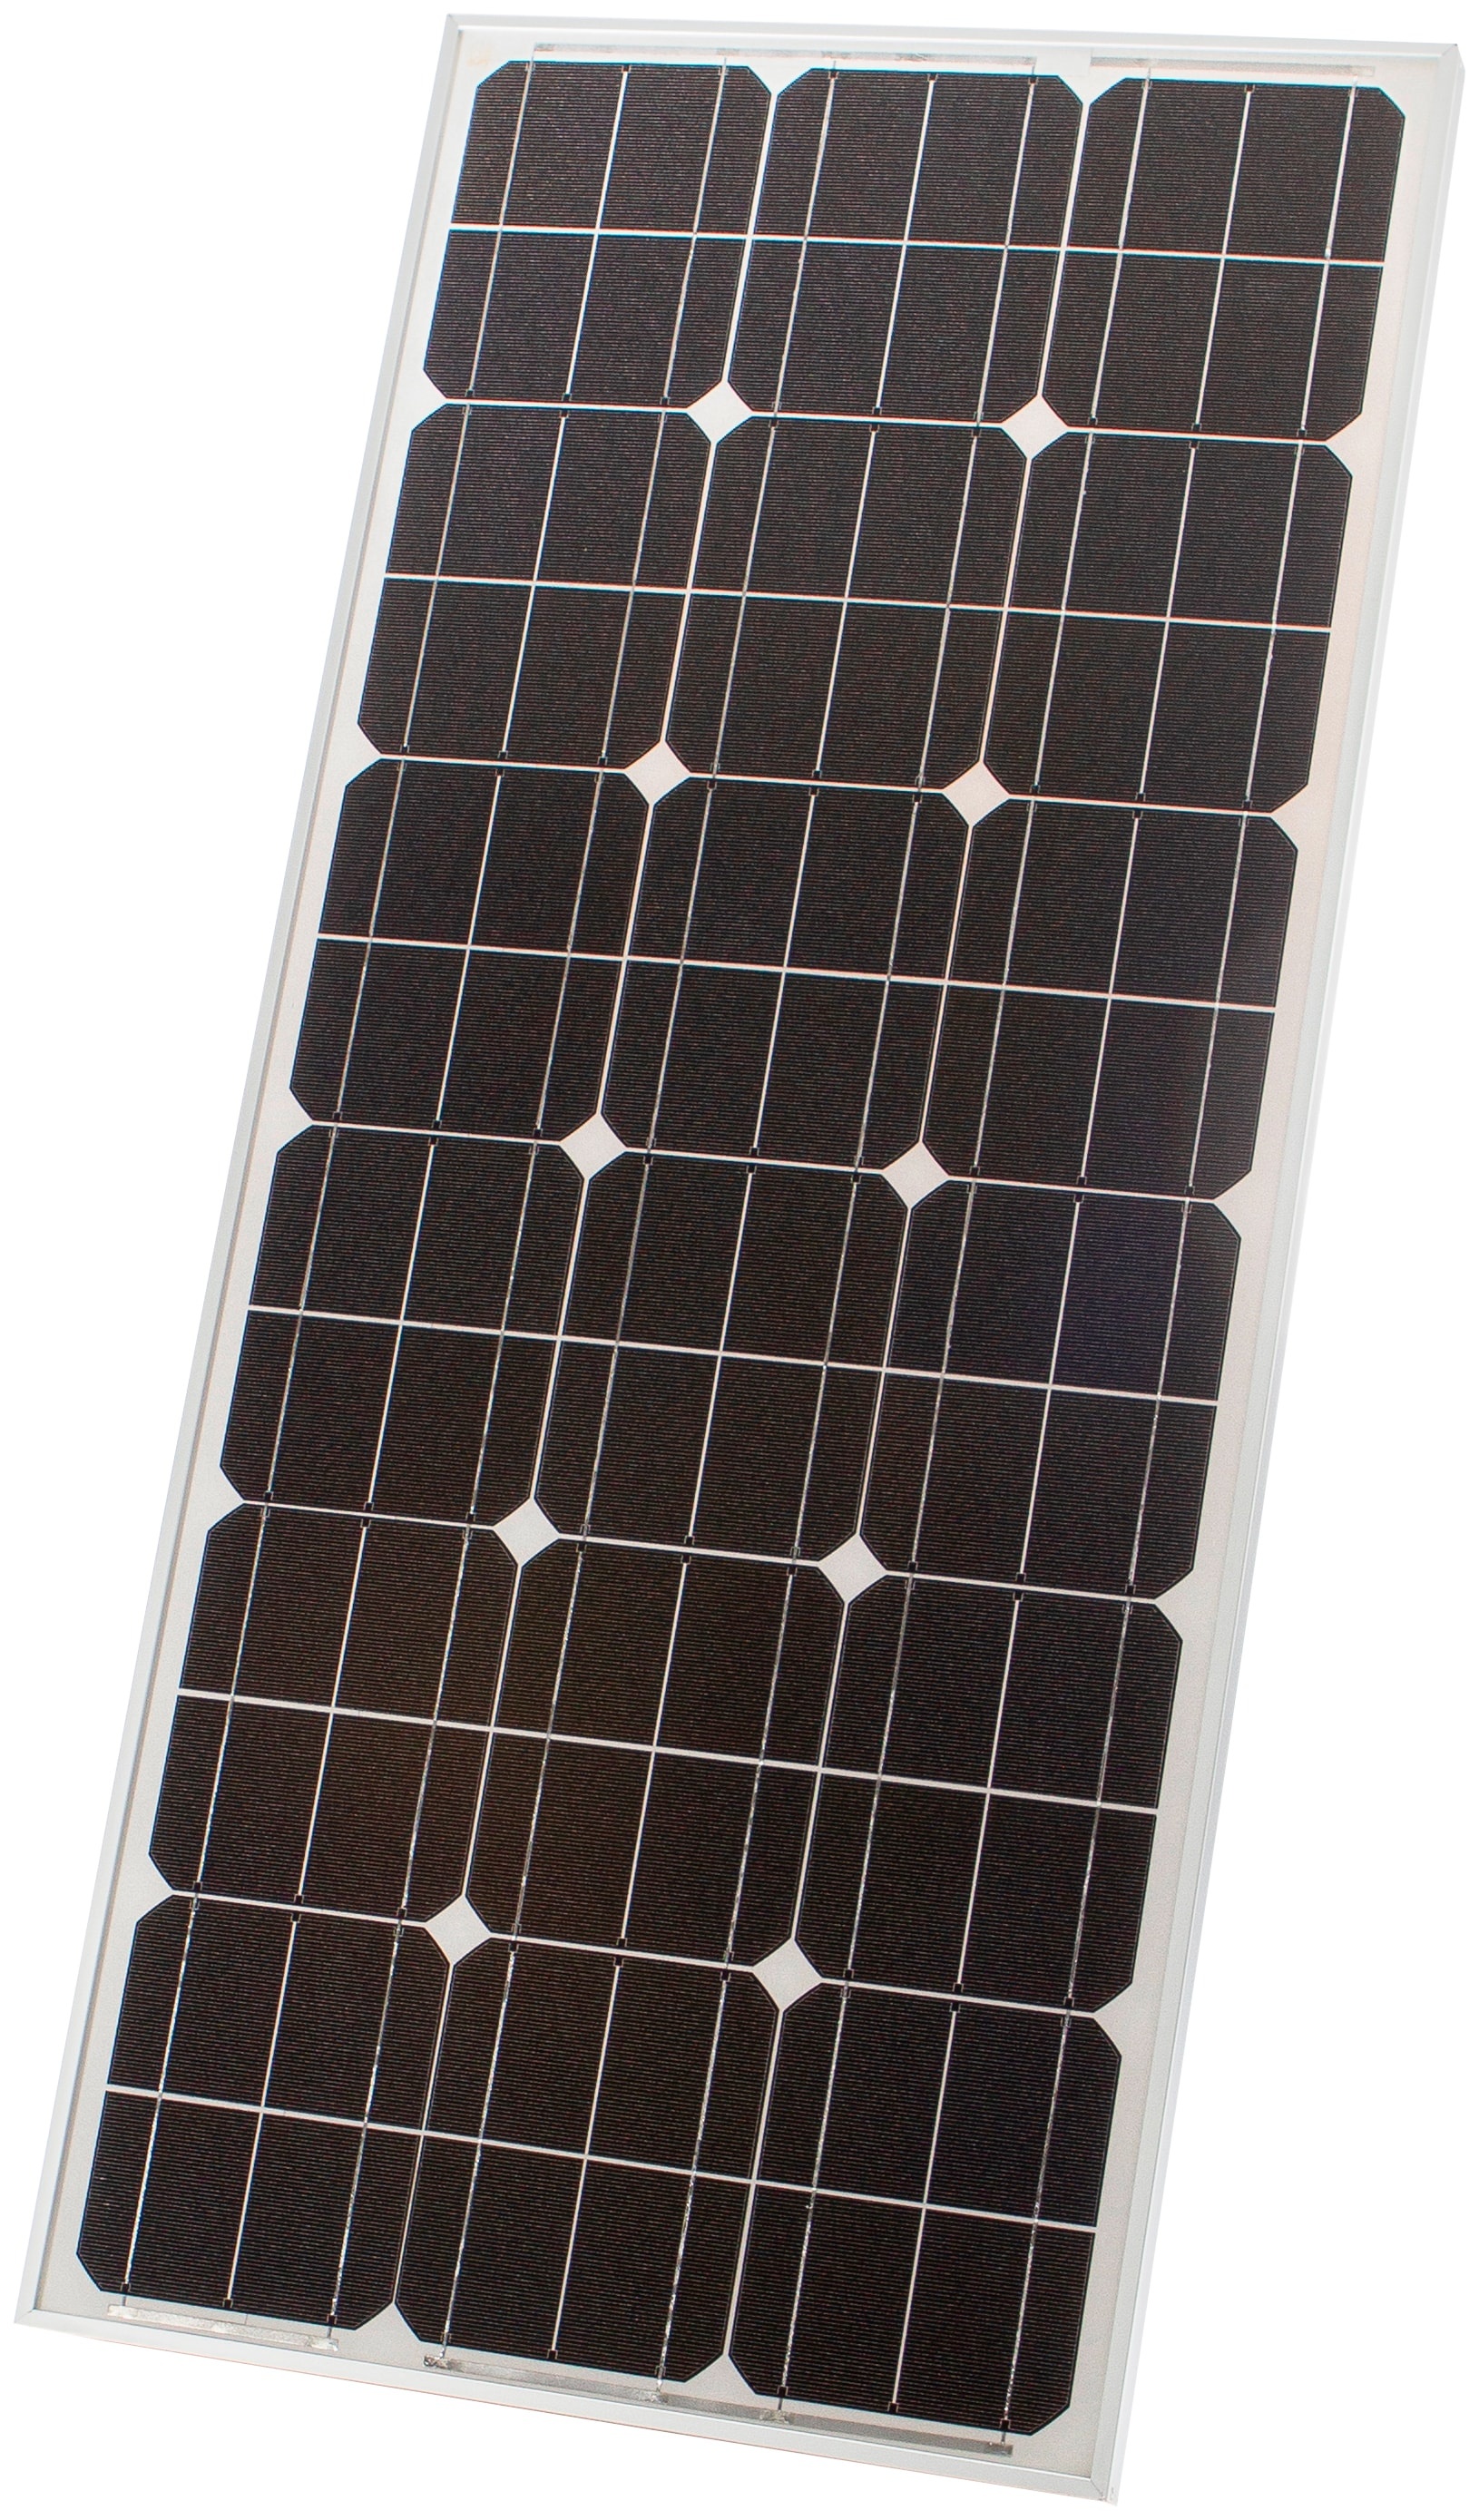 SUNSET Solarmodul "AS 75, 75 Watt, 12 V" Solarmodule blau (baumarkt) Solartechnik